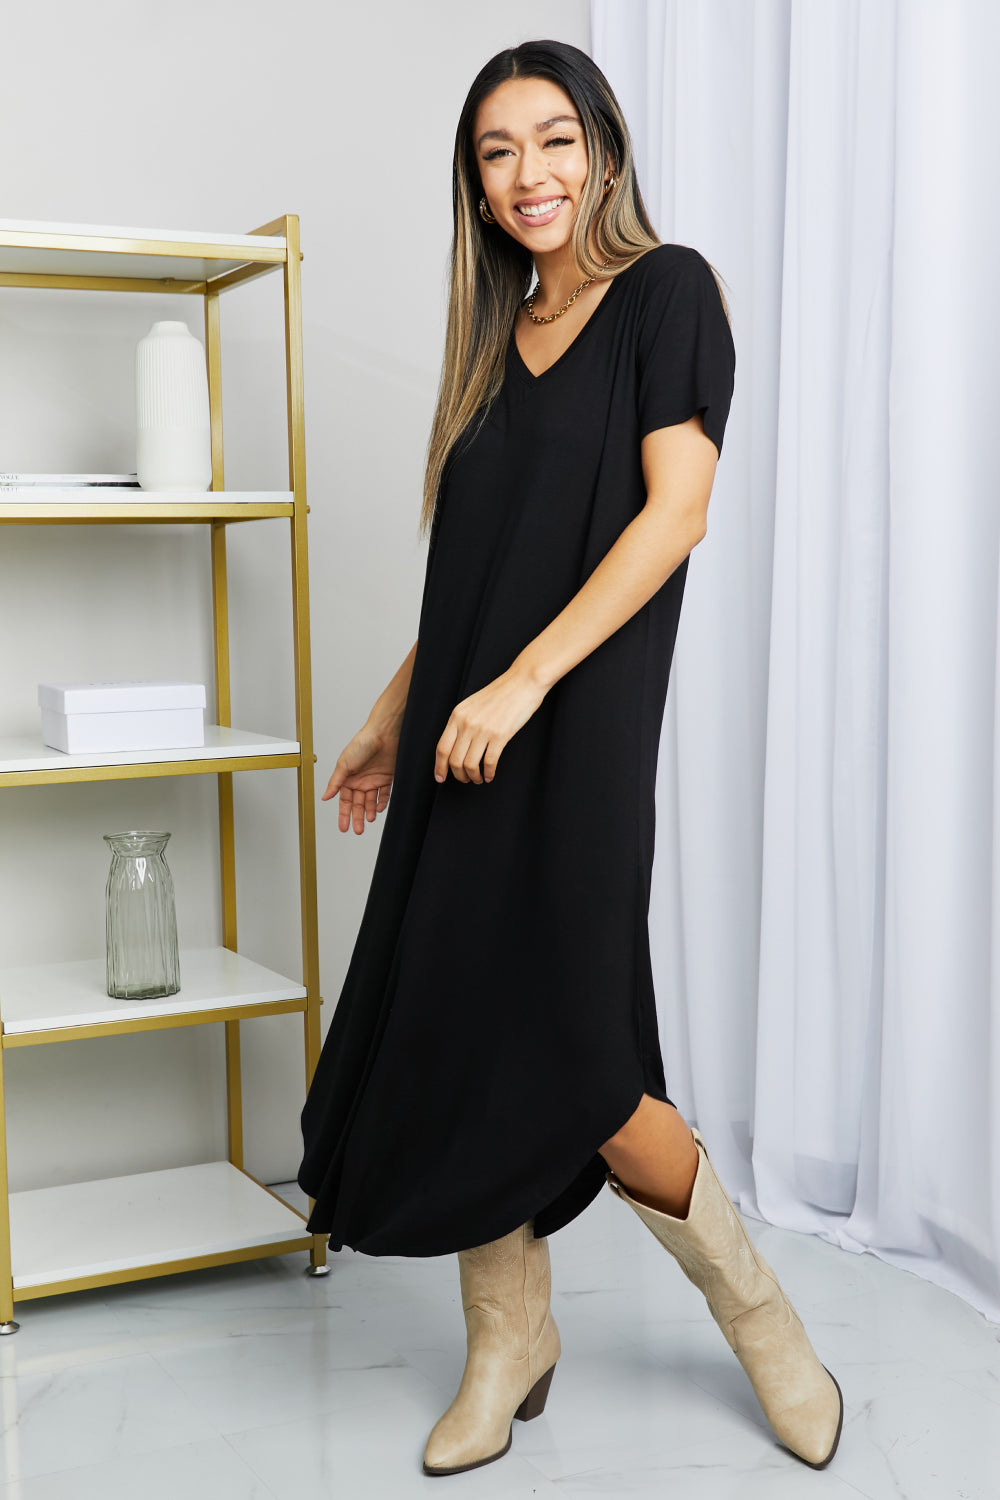 HYFVE V-Neck Short Sleeve Curved Hem Dress in Black | Dresses - CHANELIA